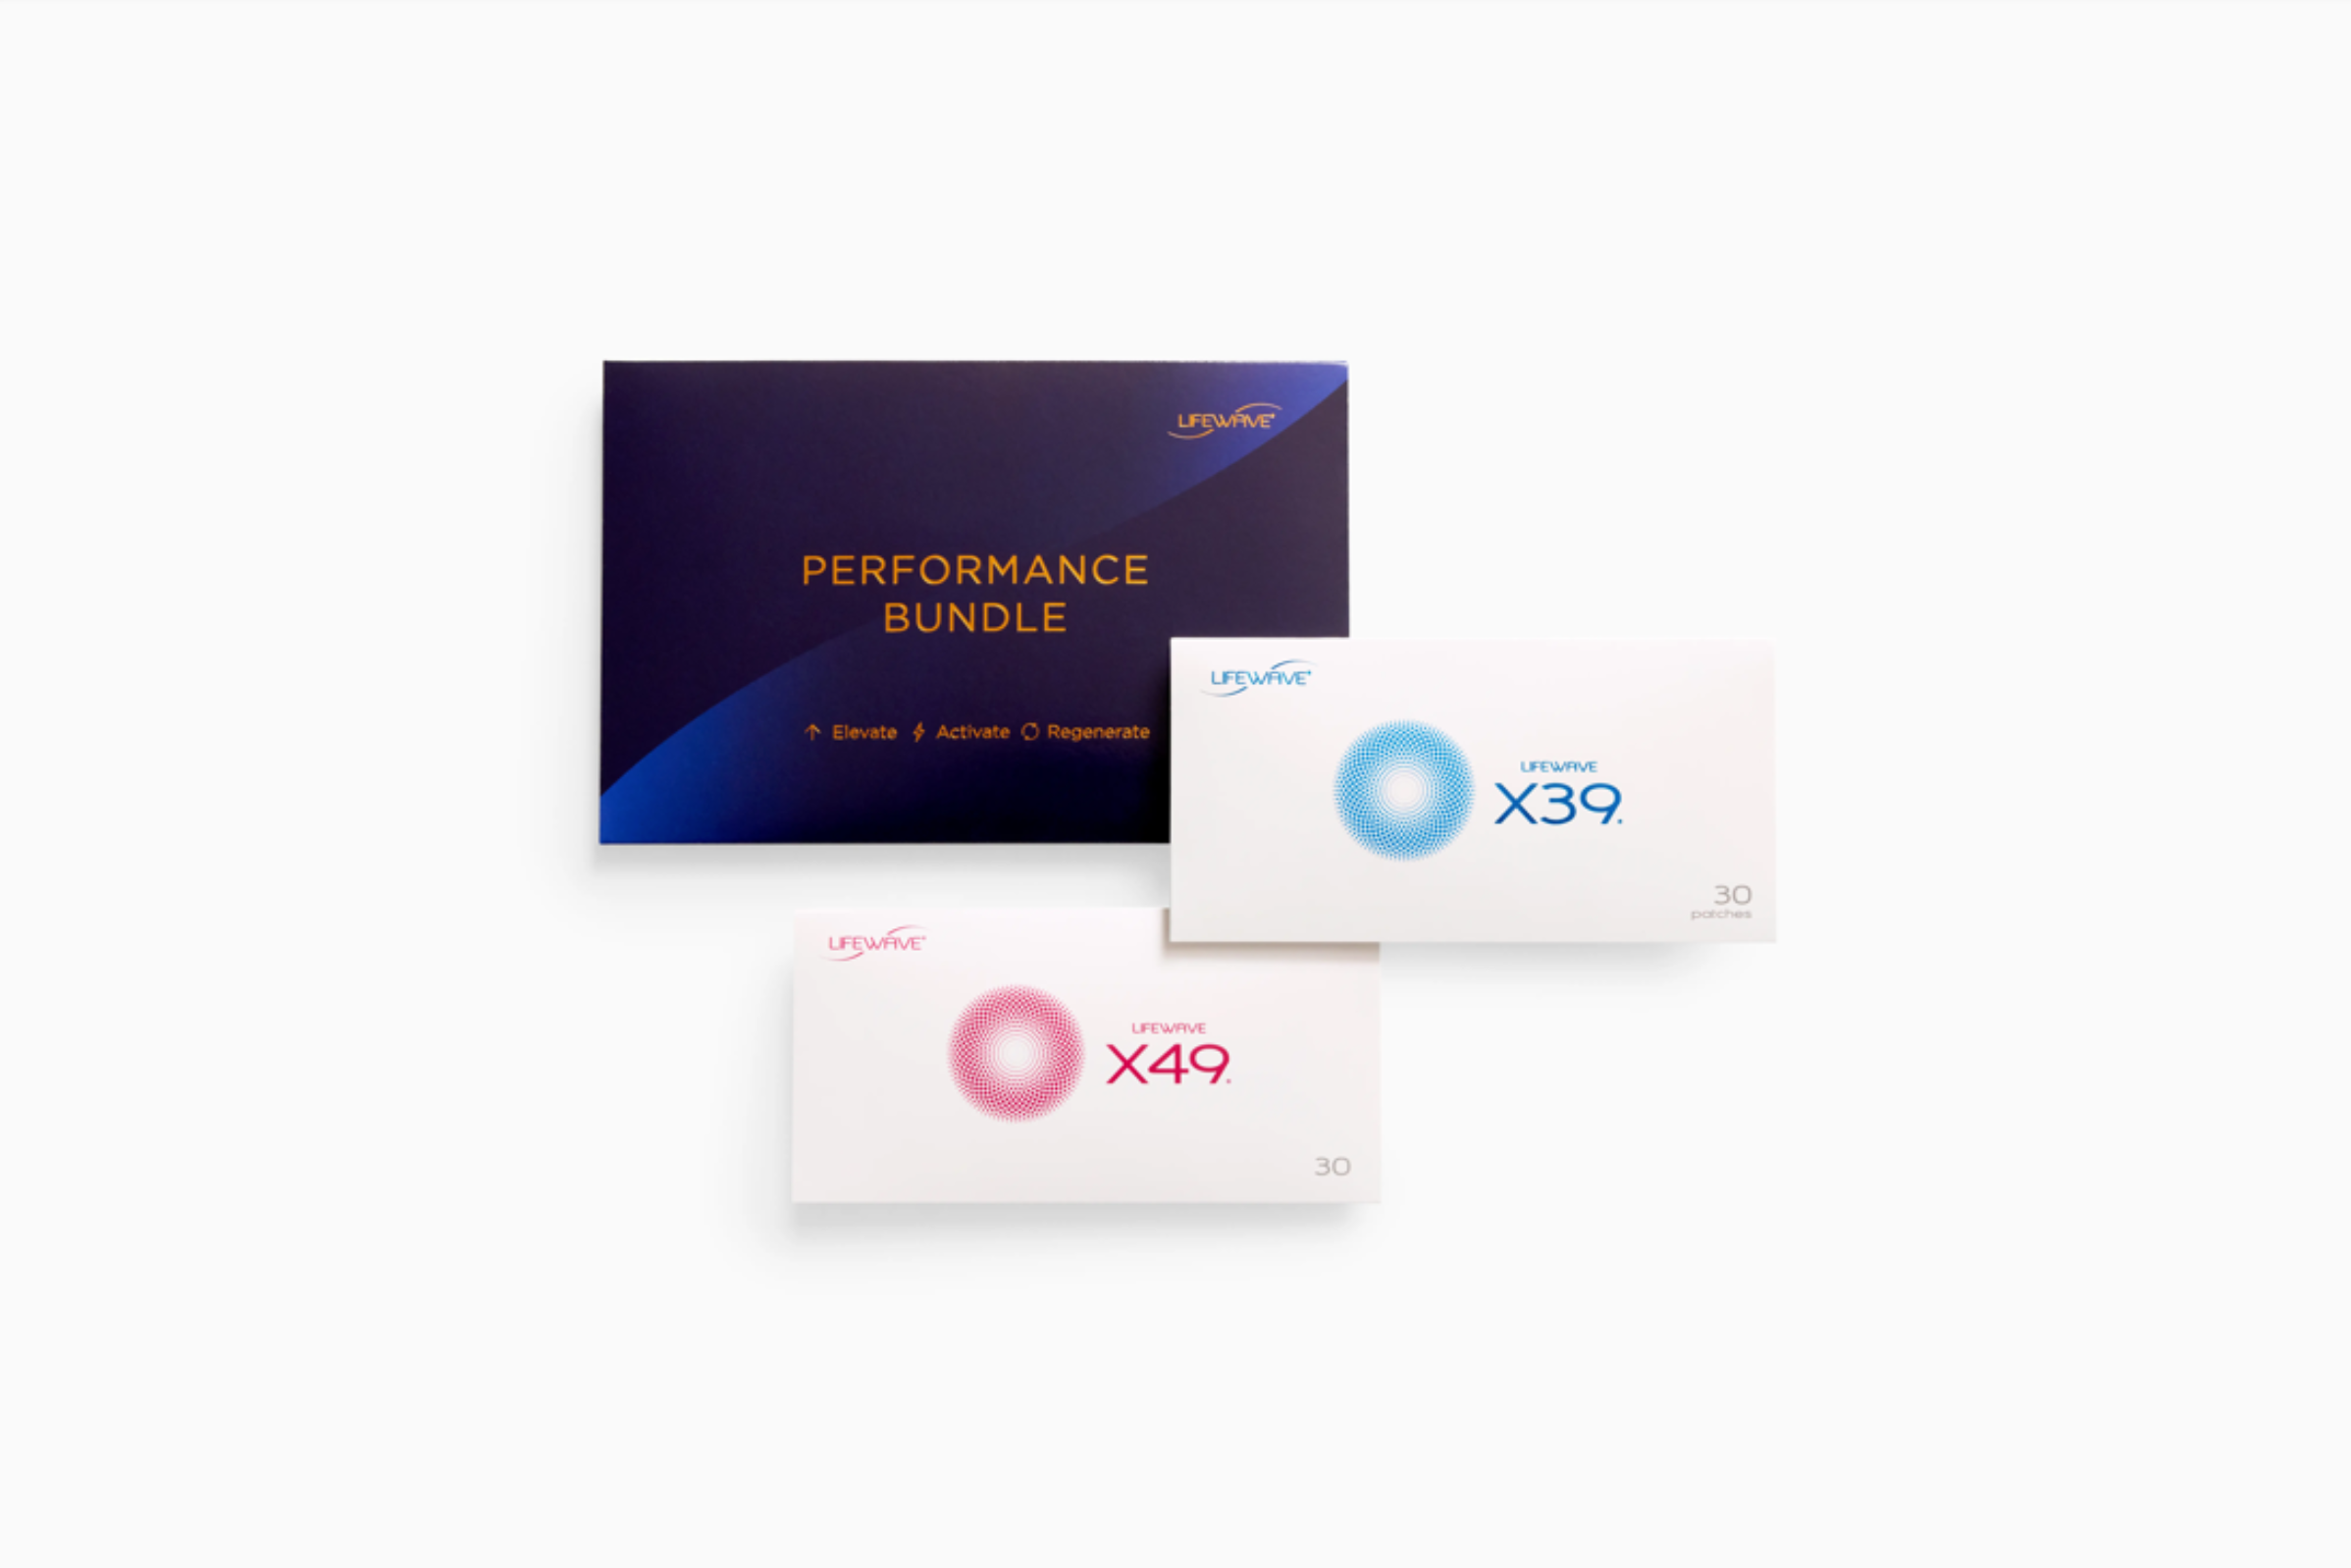 X39® & X49™ Performance Bundle